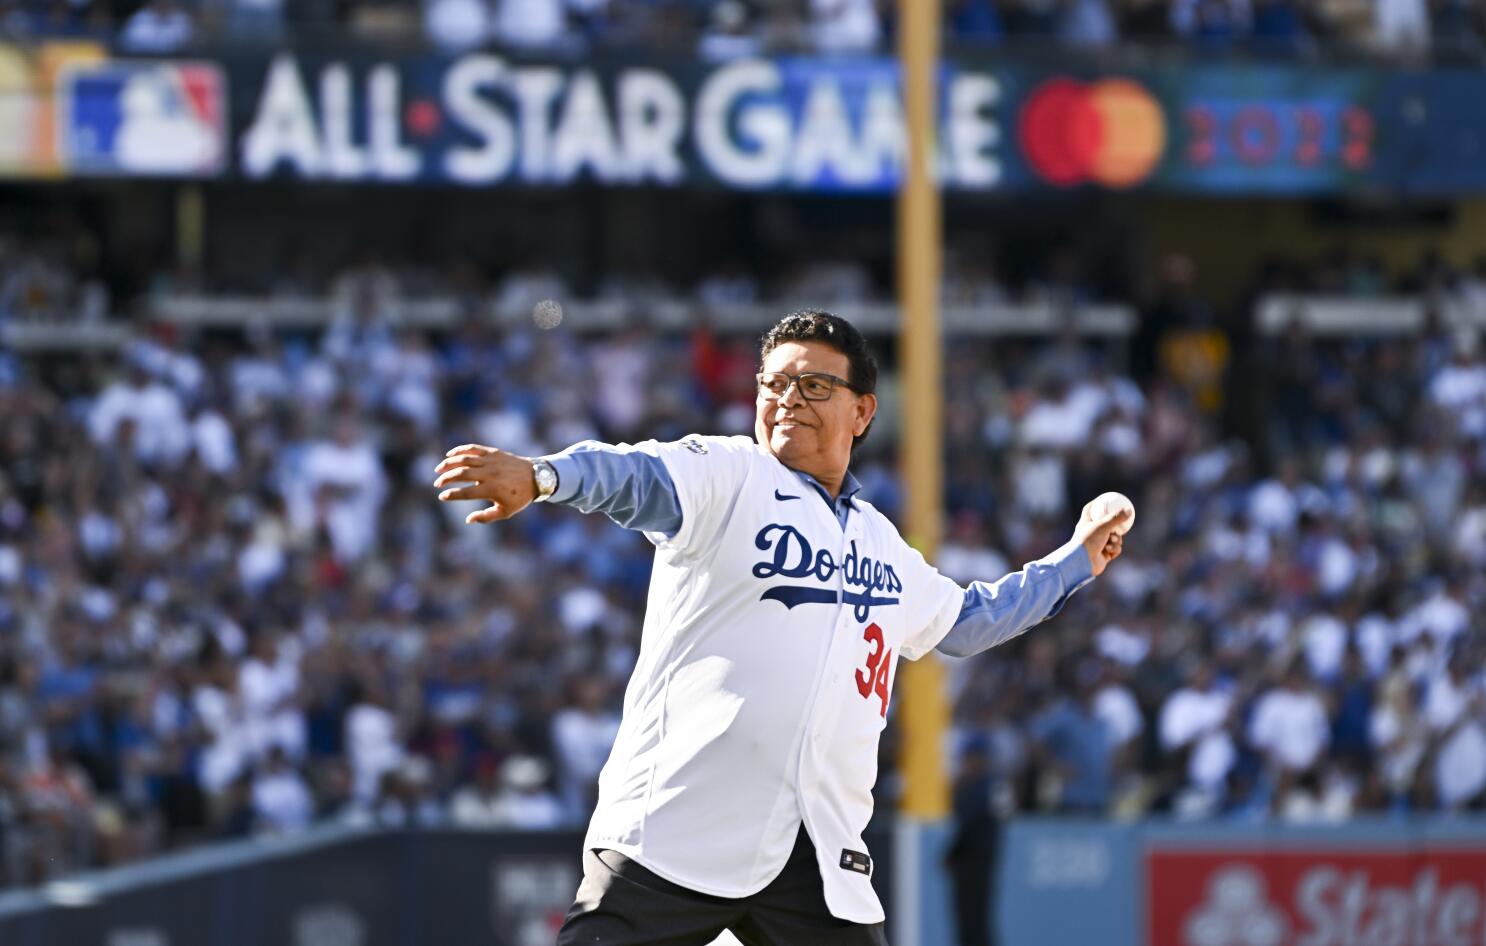 Dodgers kick off celebration of Fernando Valenzuela with jersey